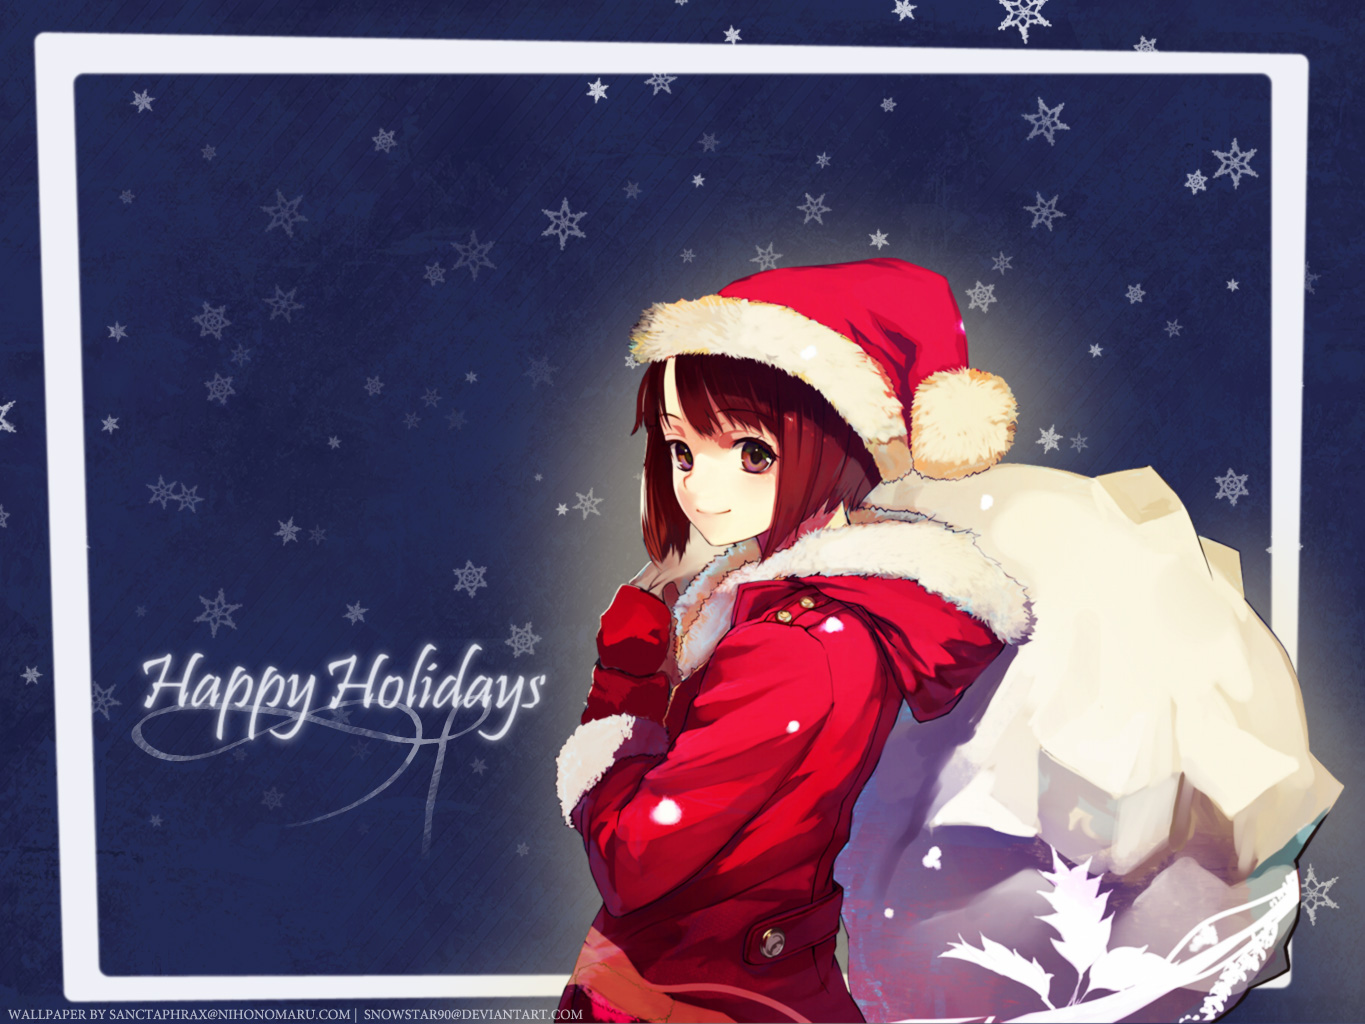 anime_christmas_wallpaper_by_snowstar90-d3572t9.jpg2140682051 